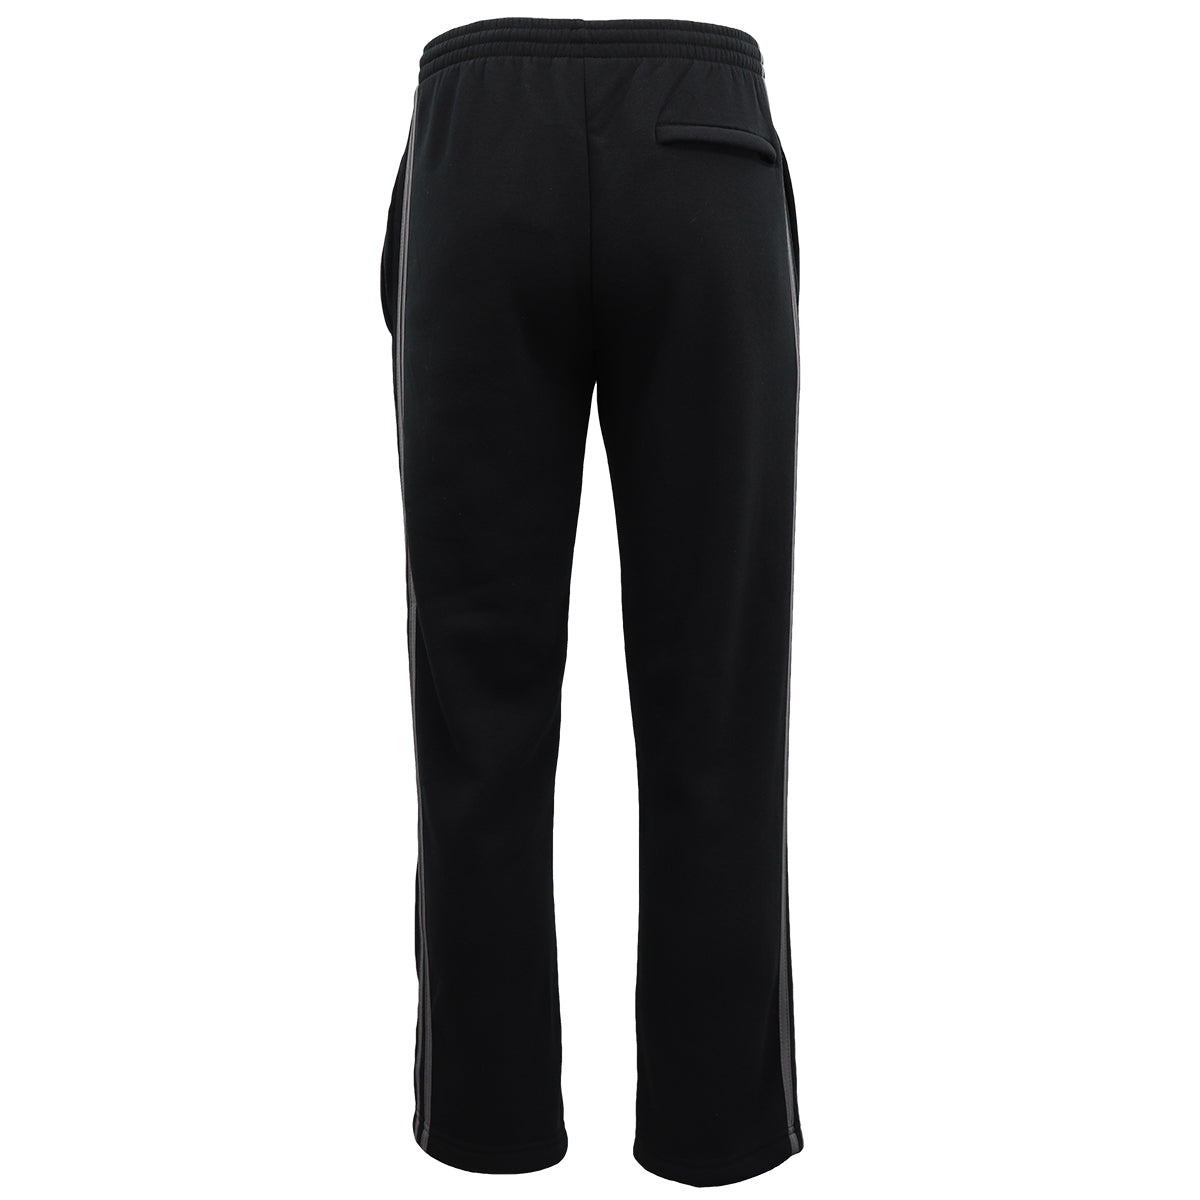 Men's Fleece Casual Sports Track Pants w Zip Pocket Striped Sweat Trousers S-6XL, Black w Grey Stripes, S